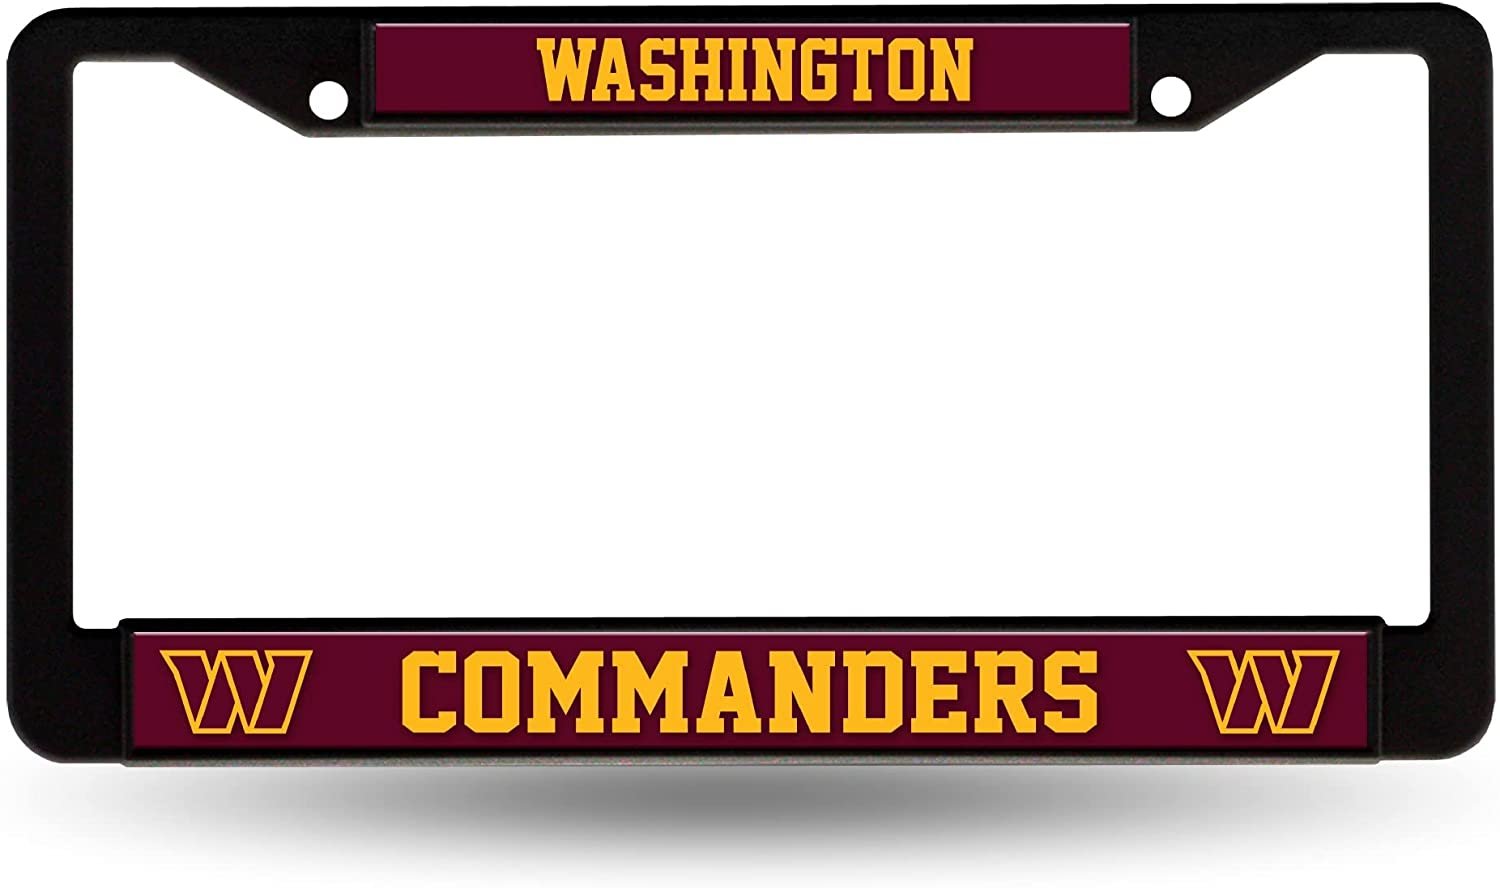 Washington Commanders License Plate Frame Tag Cover Black Plastic Football